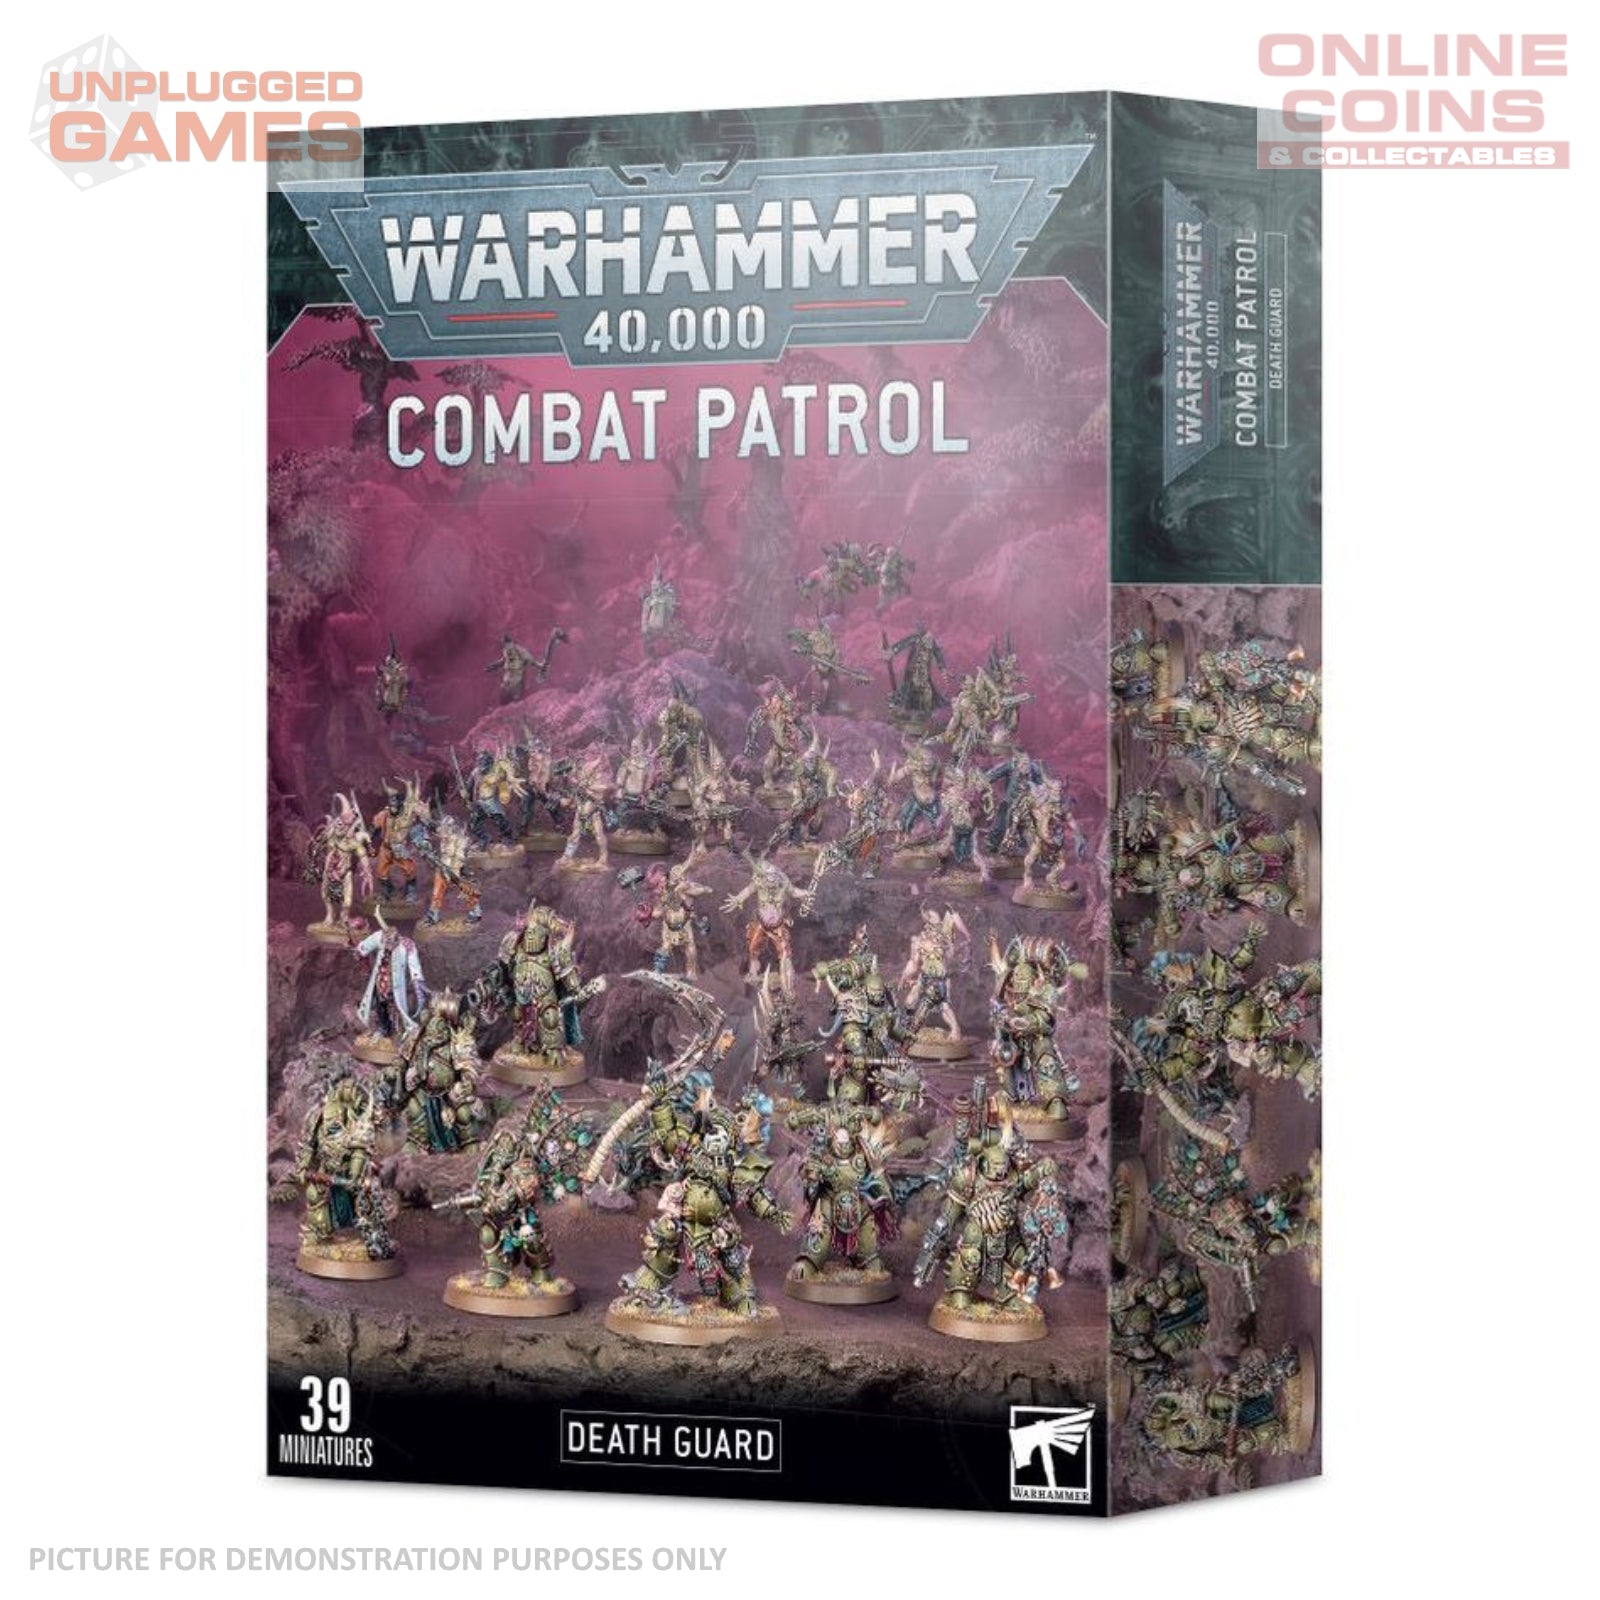 Warhammer 40,000 - Combat Patrol Death Guard